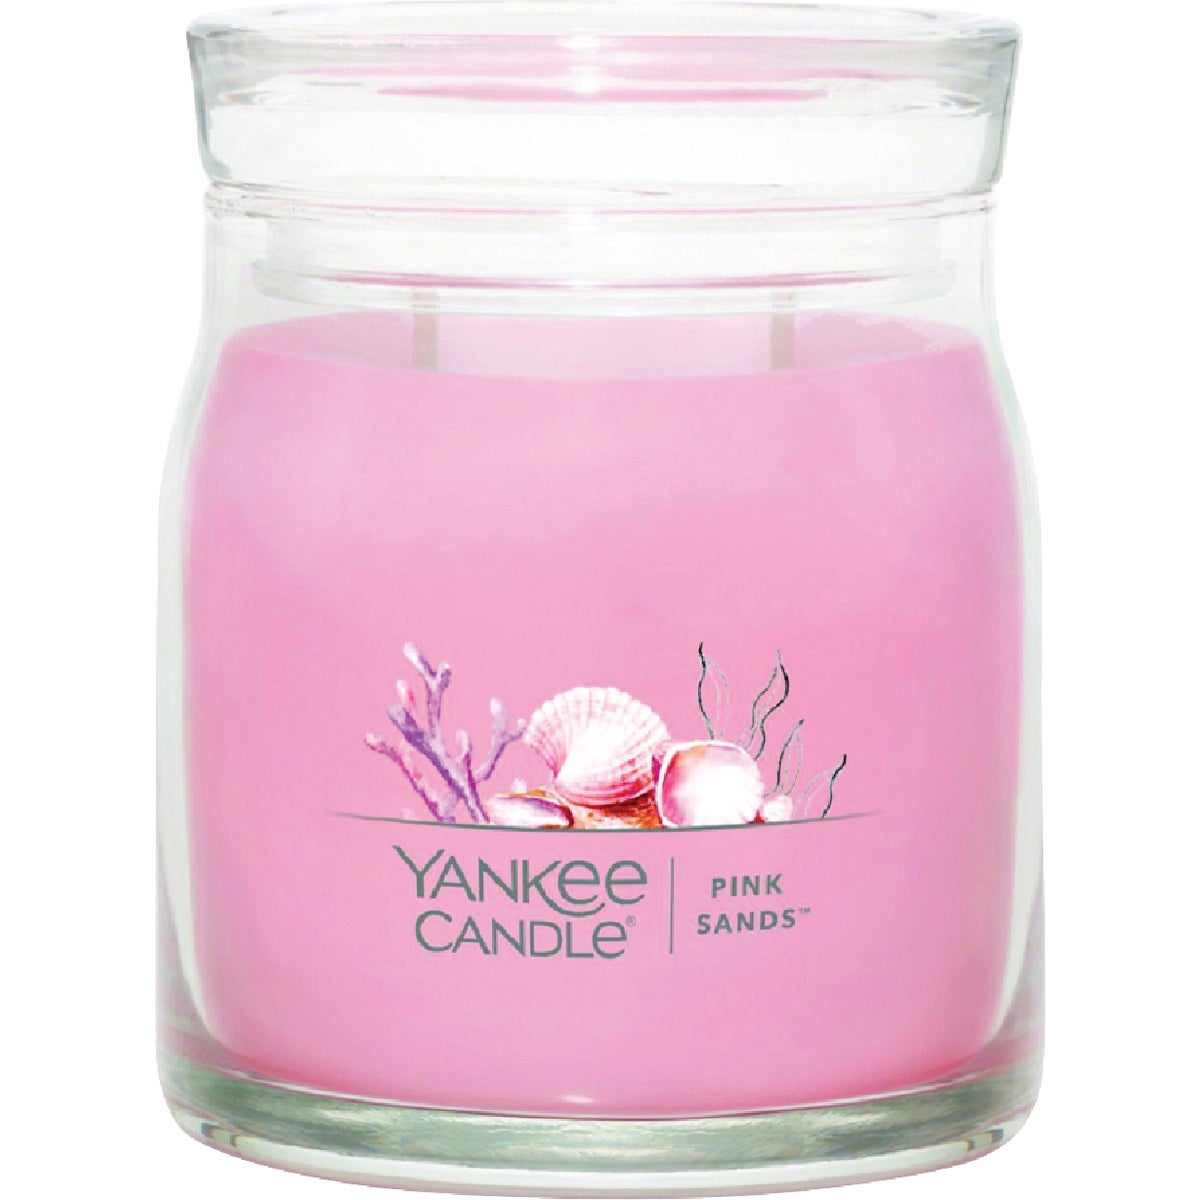 Yankee Candle 13 Oz. Pink Sands Medium Jar Candle